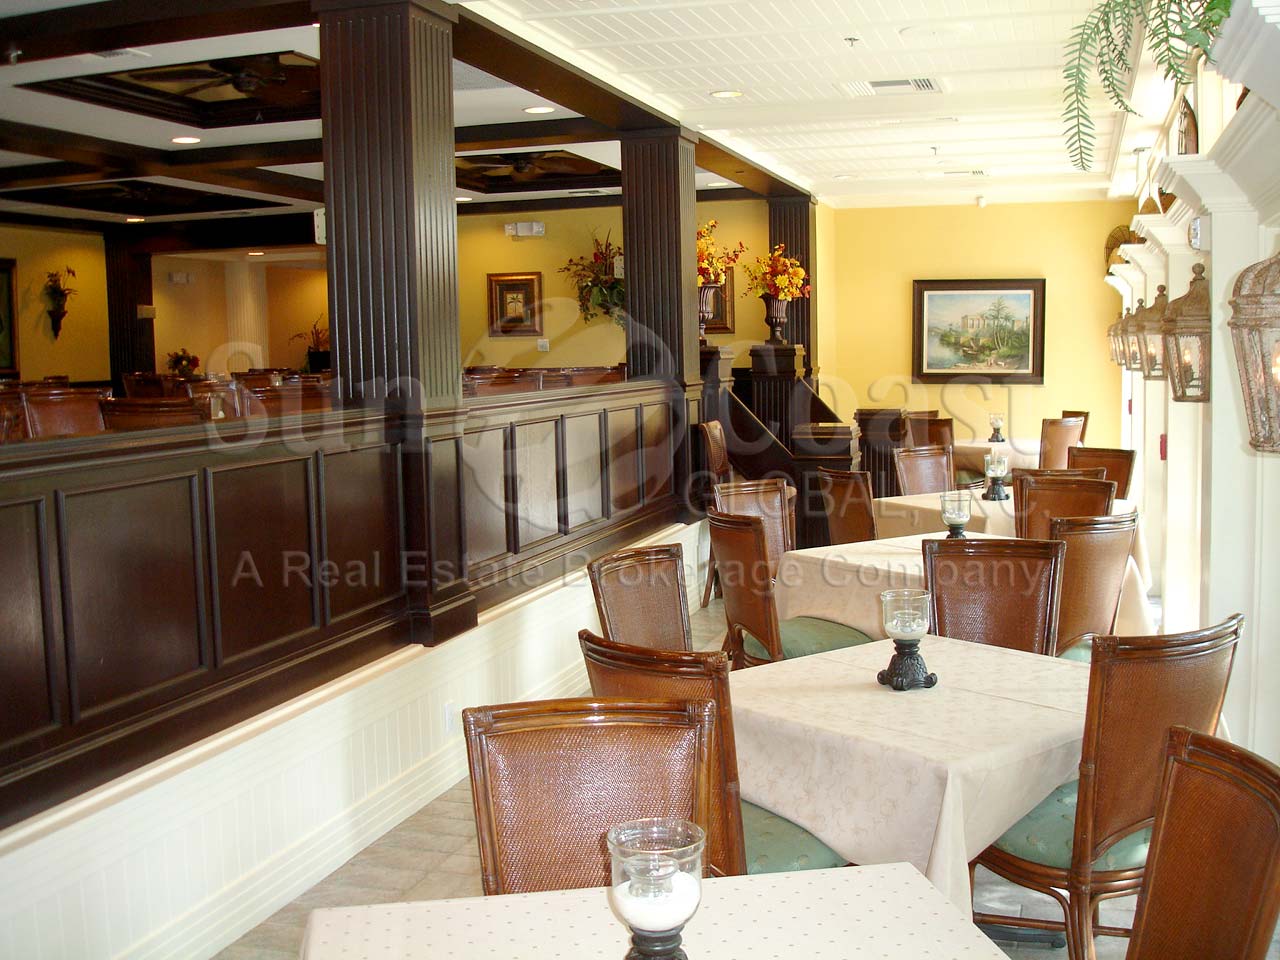 Tarpon Cove Yacht and Racquet Club Restaurant